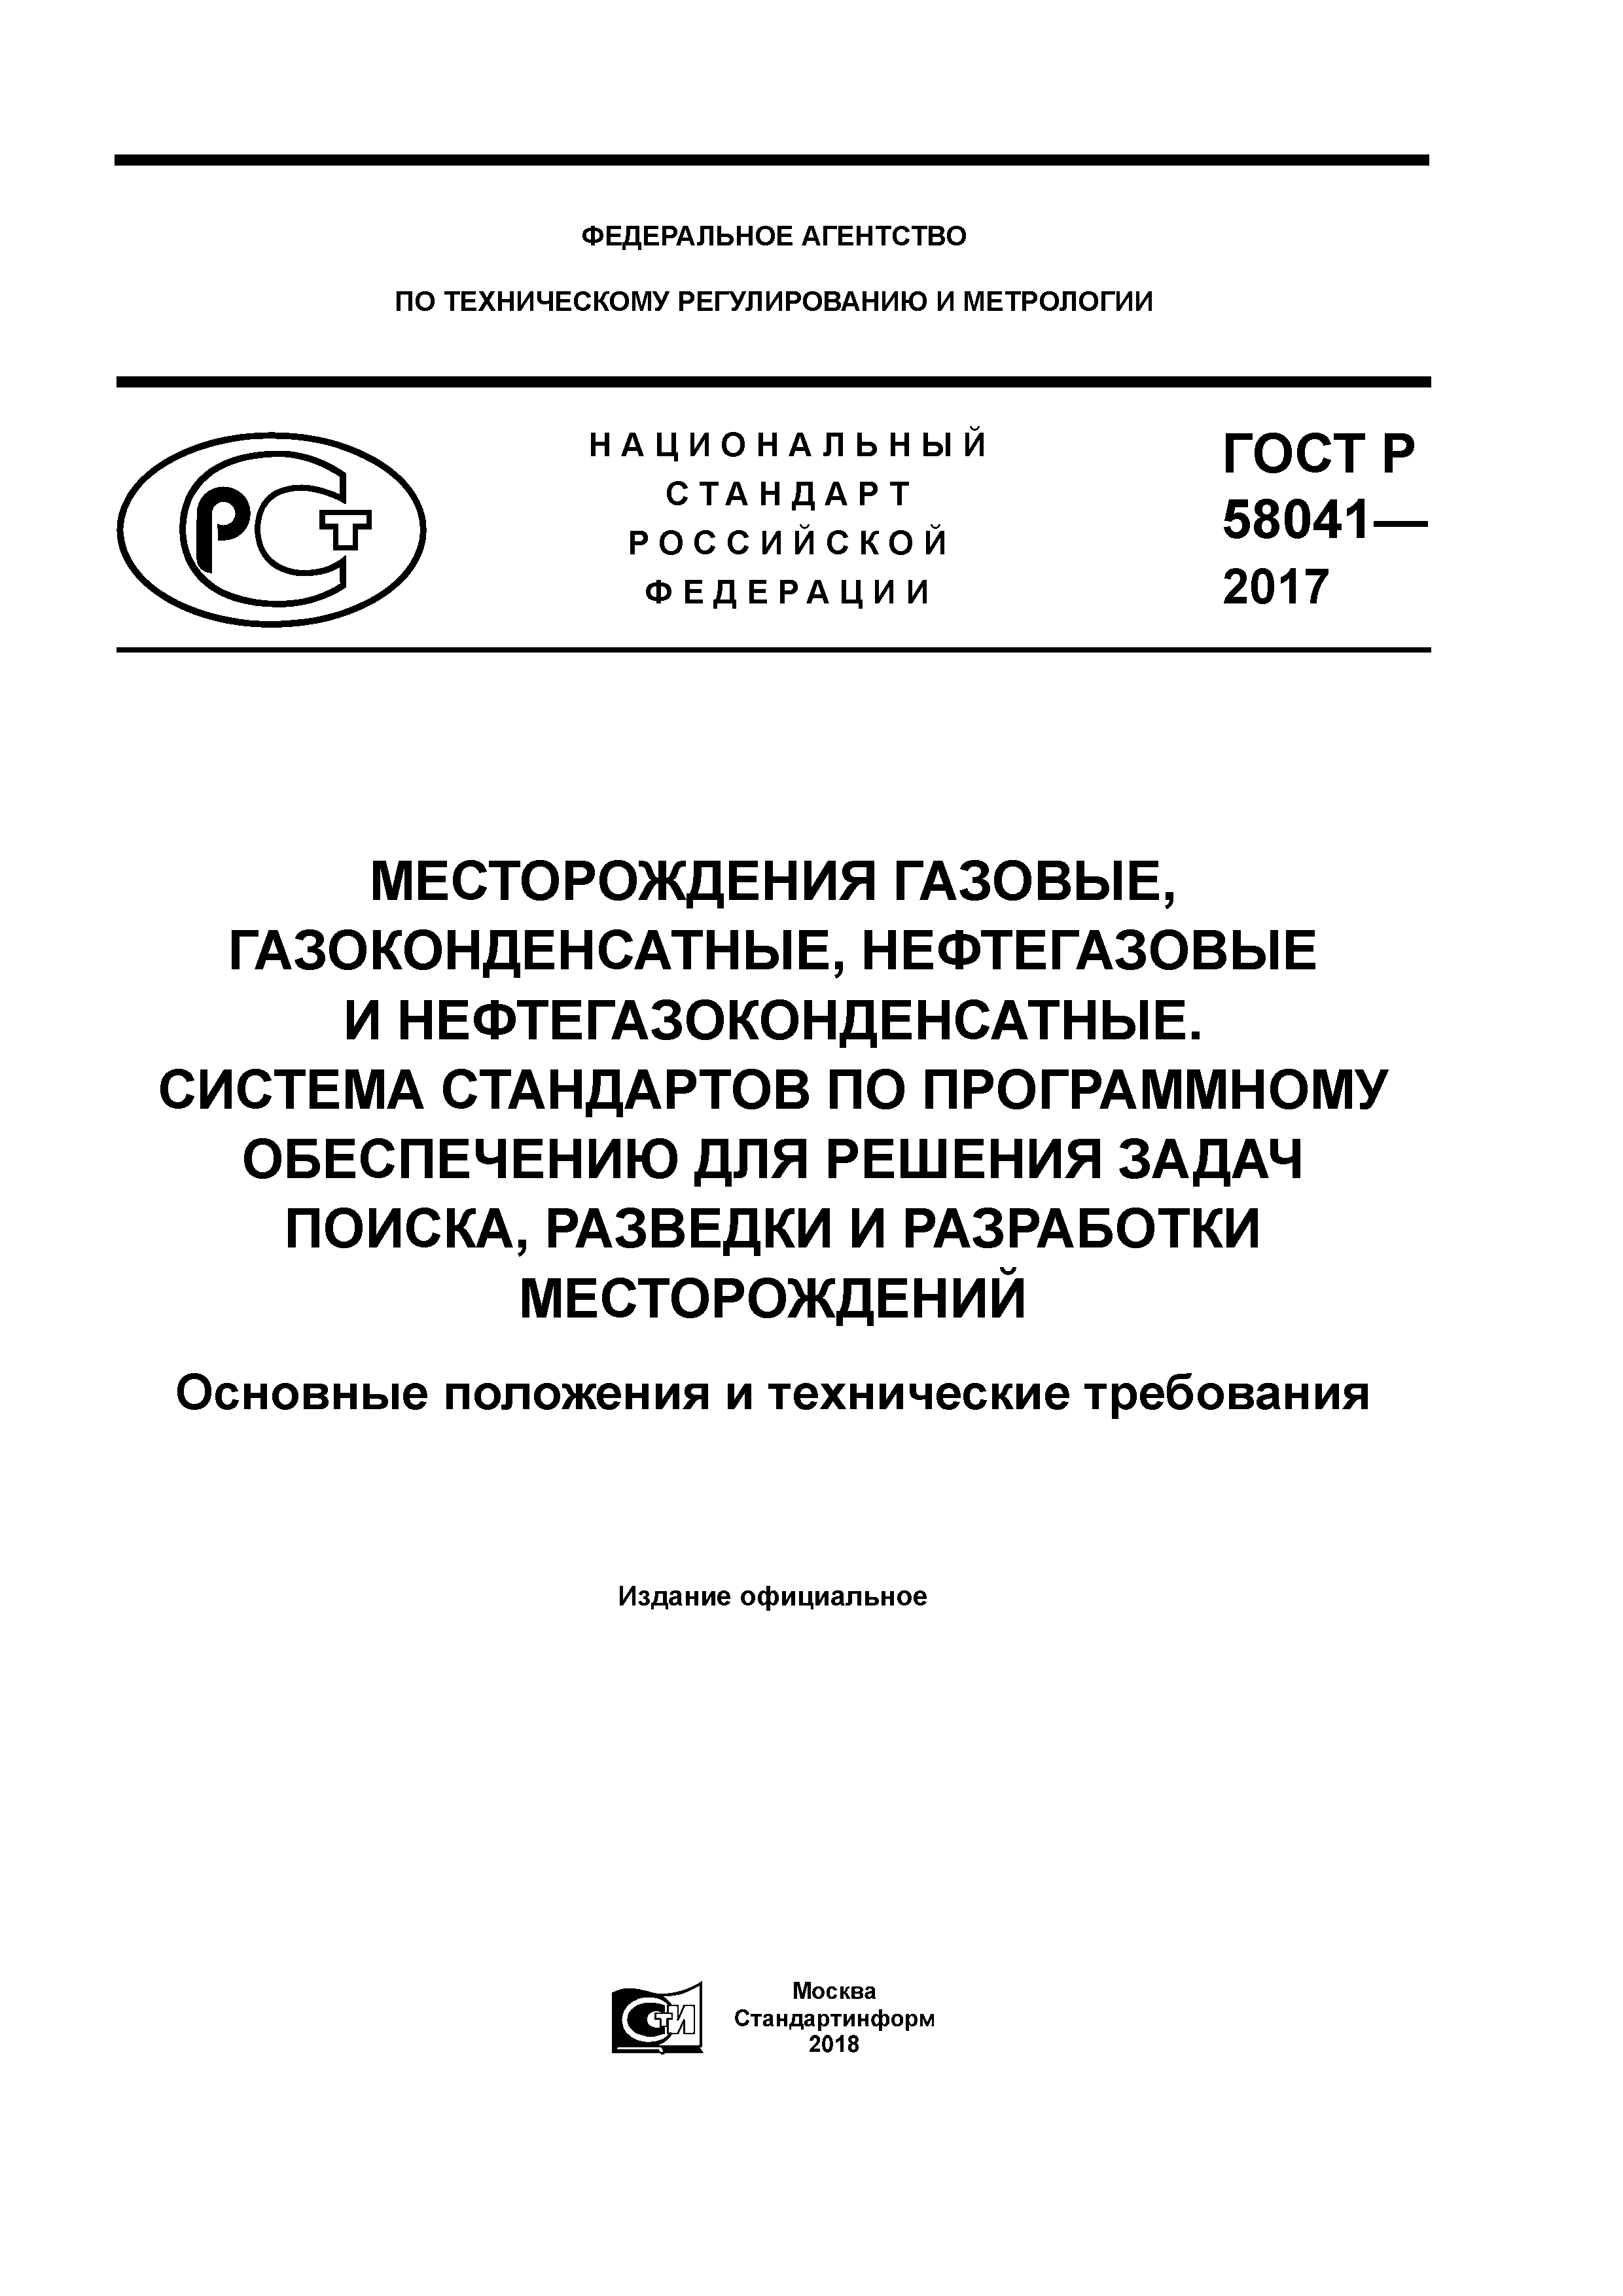 ГОСТ Р 58041-2017